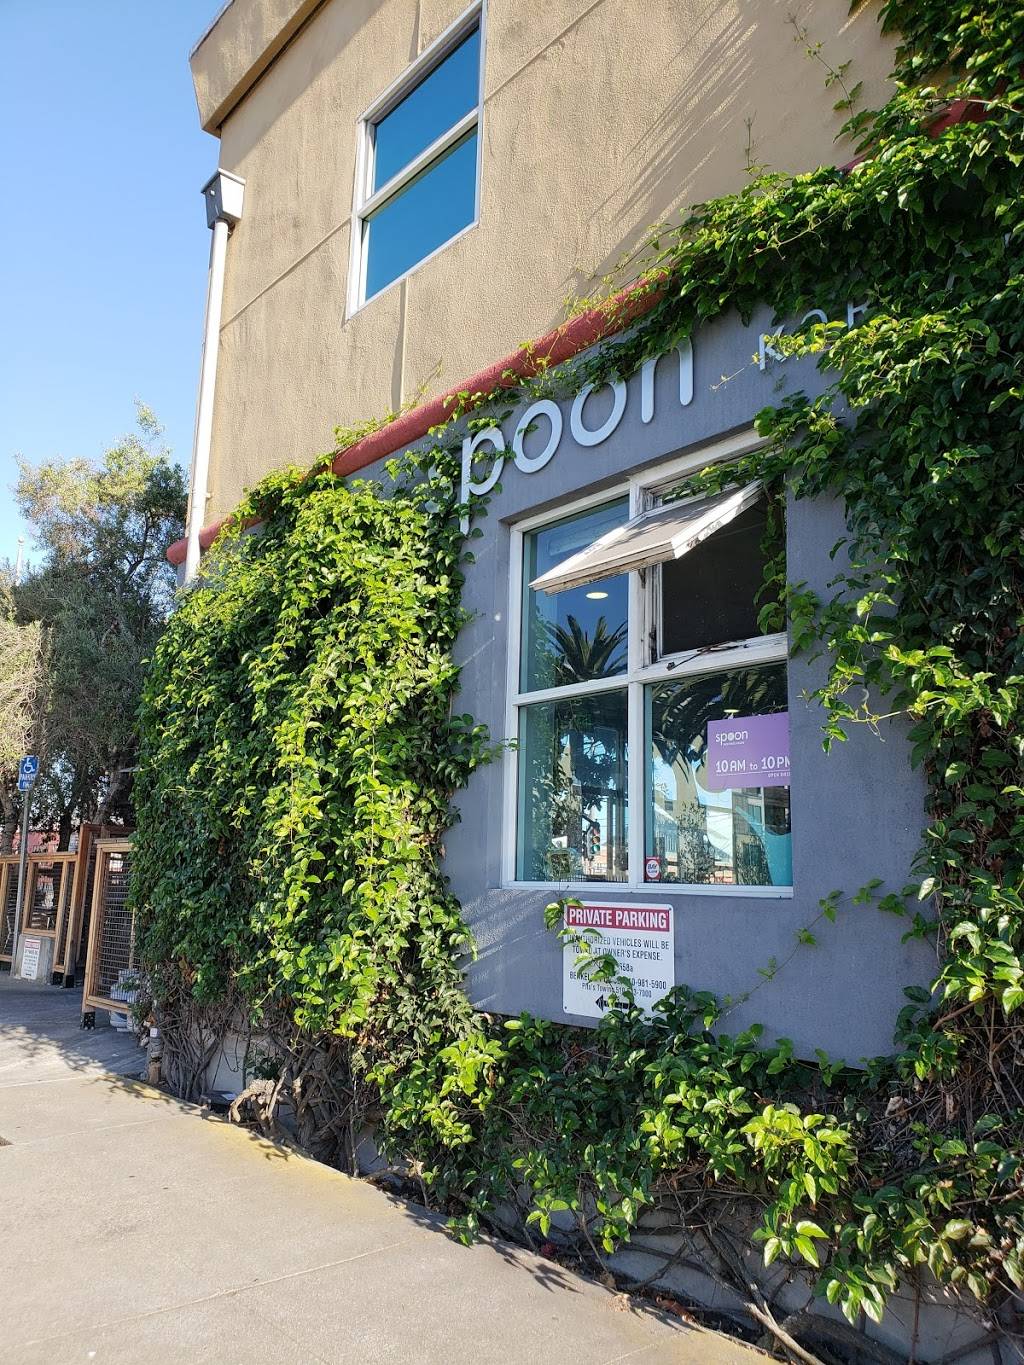 Spoon Korean Bistro | restaurant | 933 Ashby Ave, Berkeley, CA 94710, USA | 5107049555 OR +1 510-704-9555